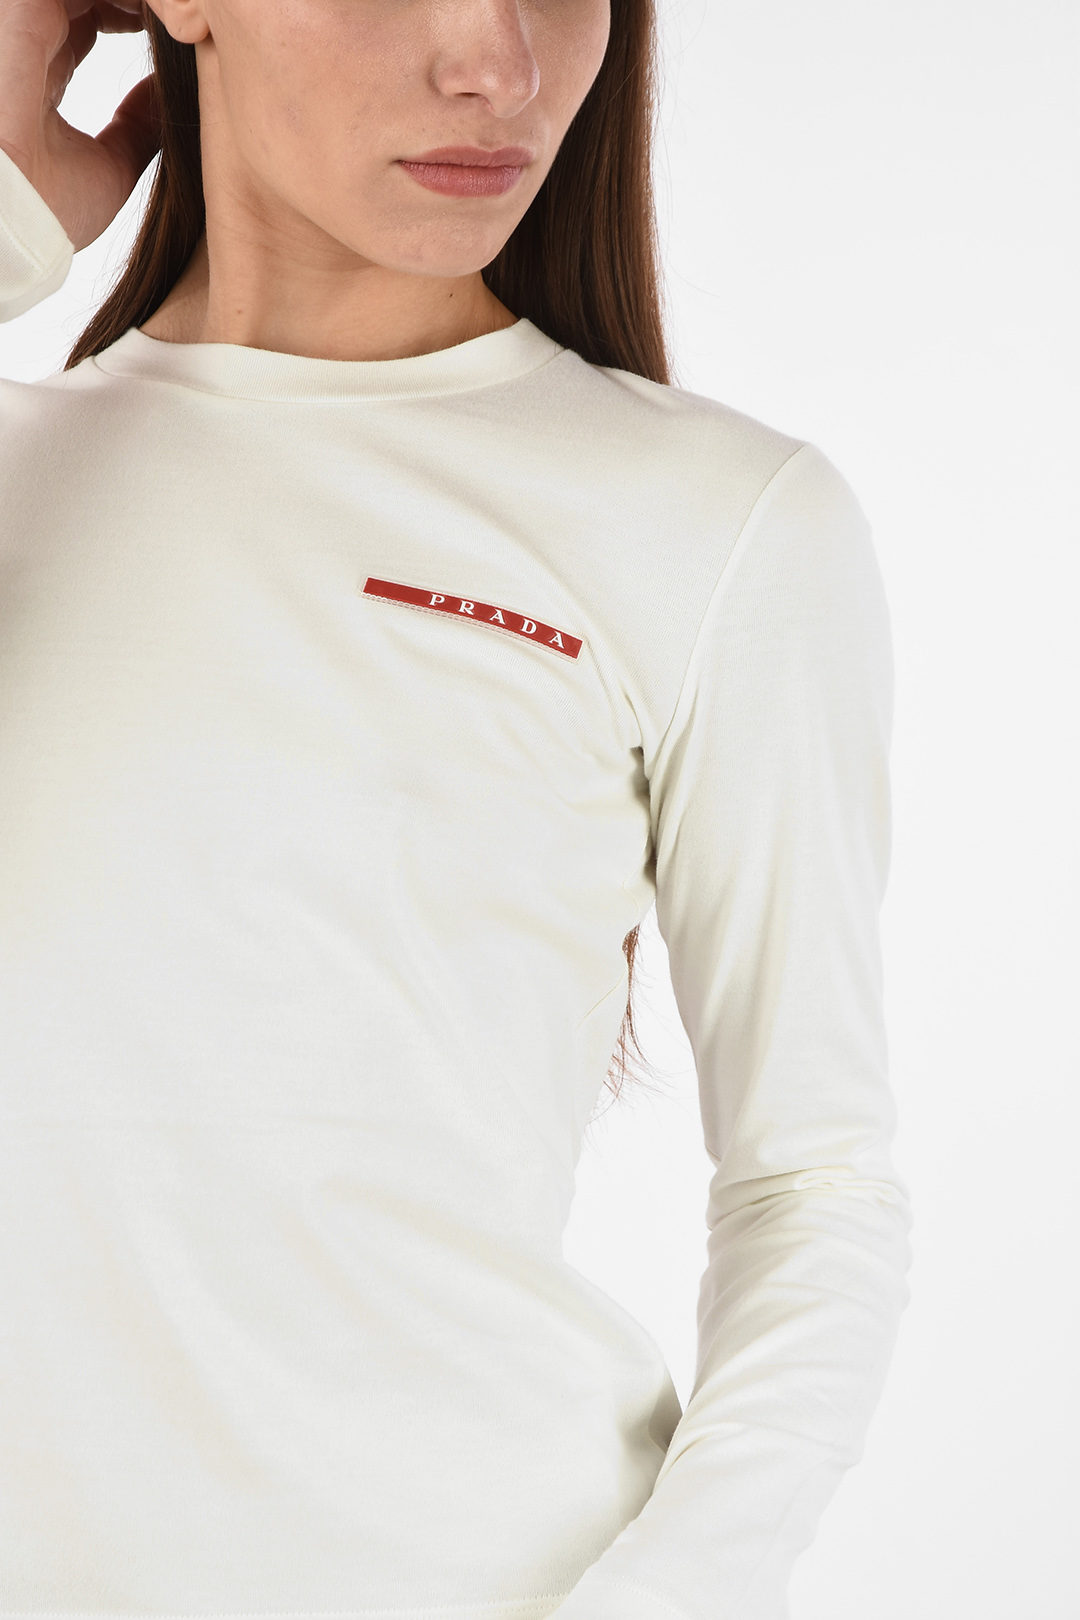 Prada Long Sleeve Crew-Neck T-shirt women - Glamood Outlet